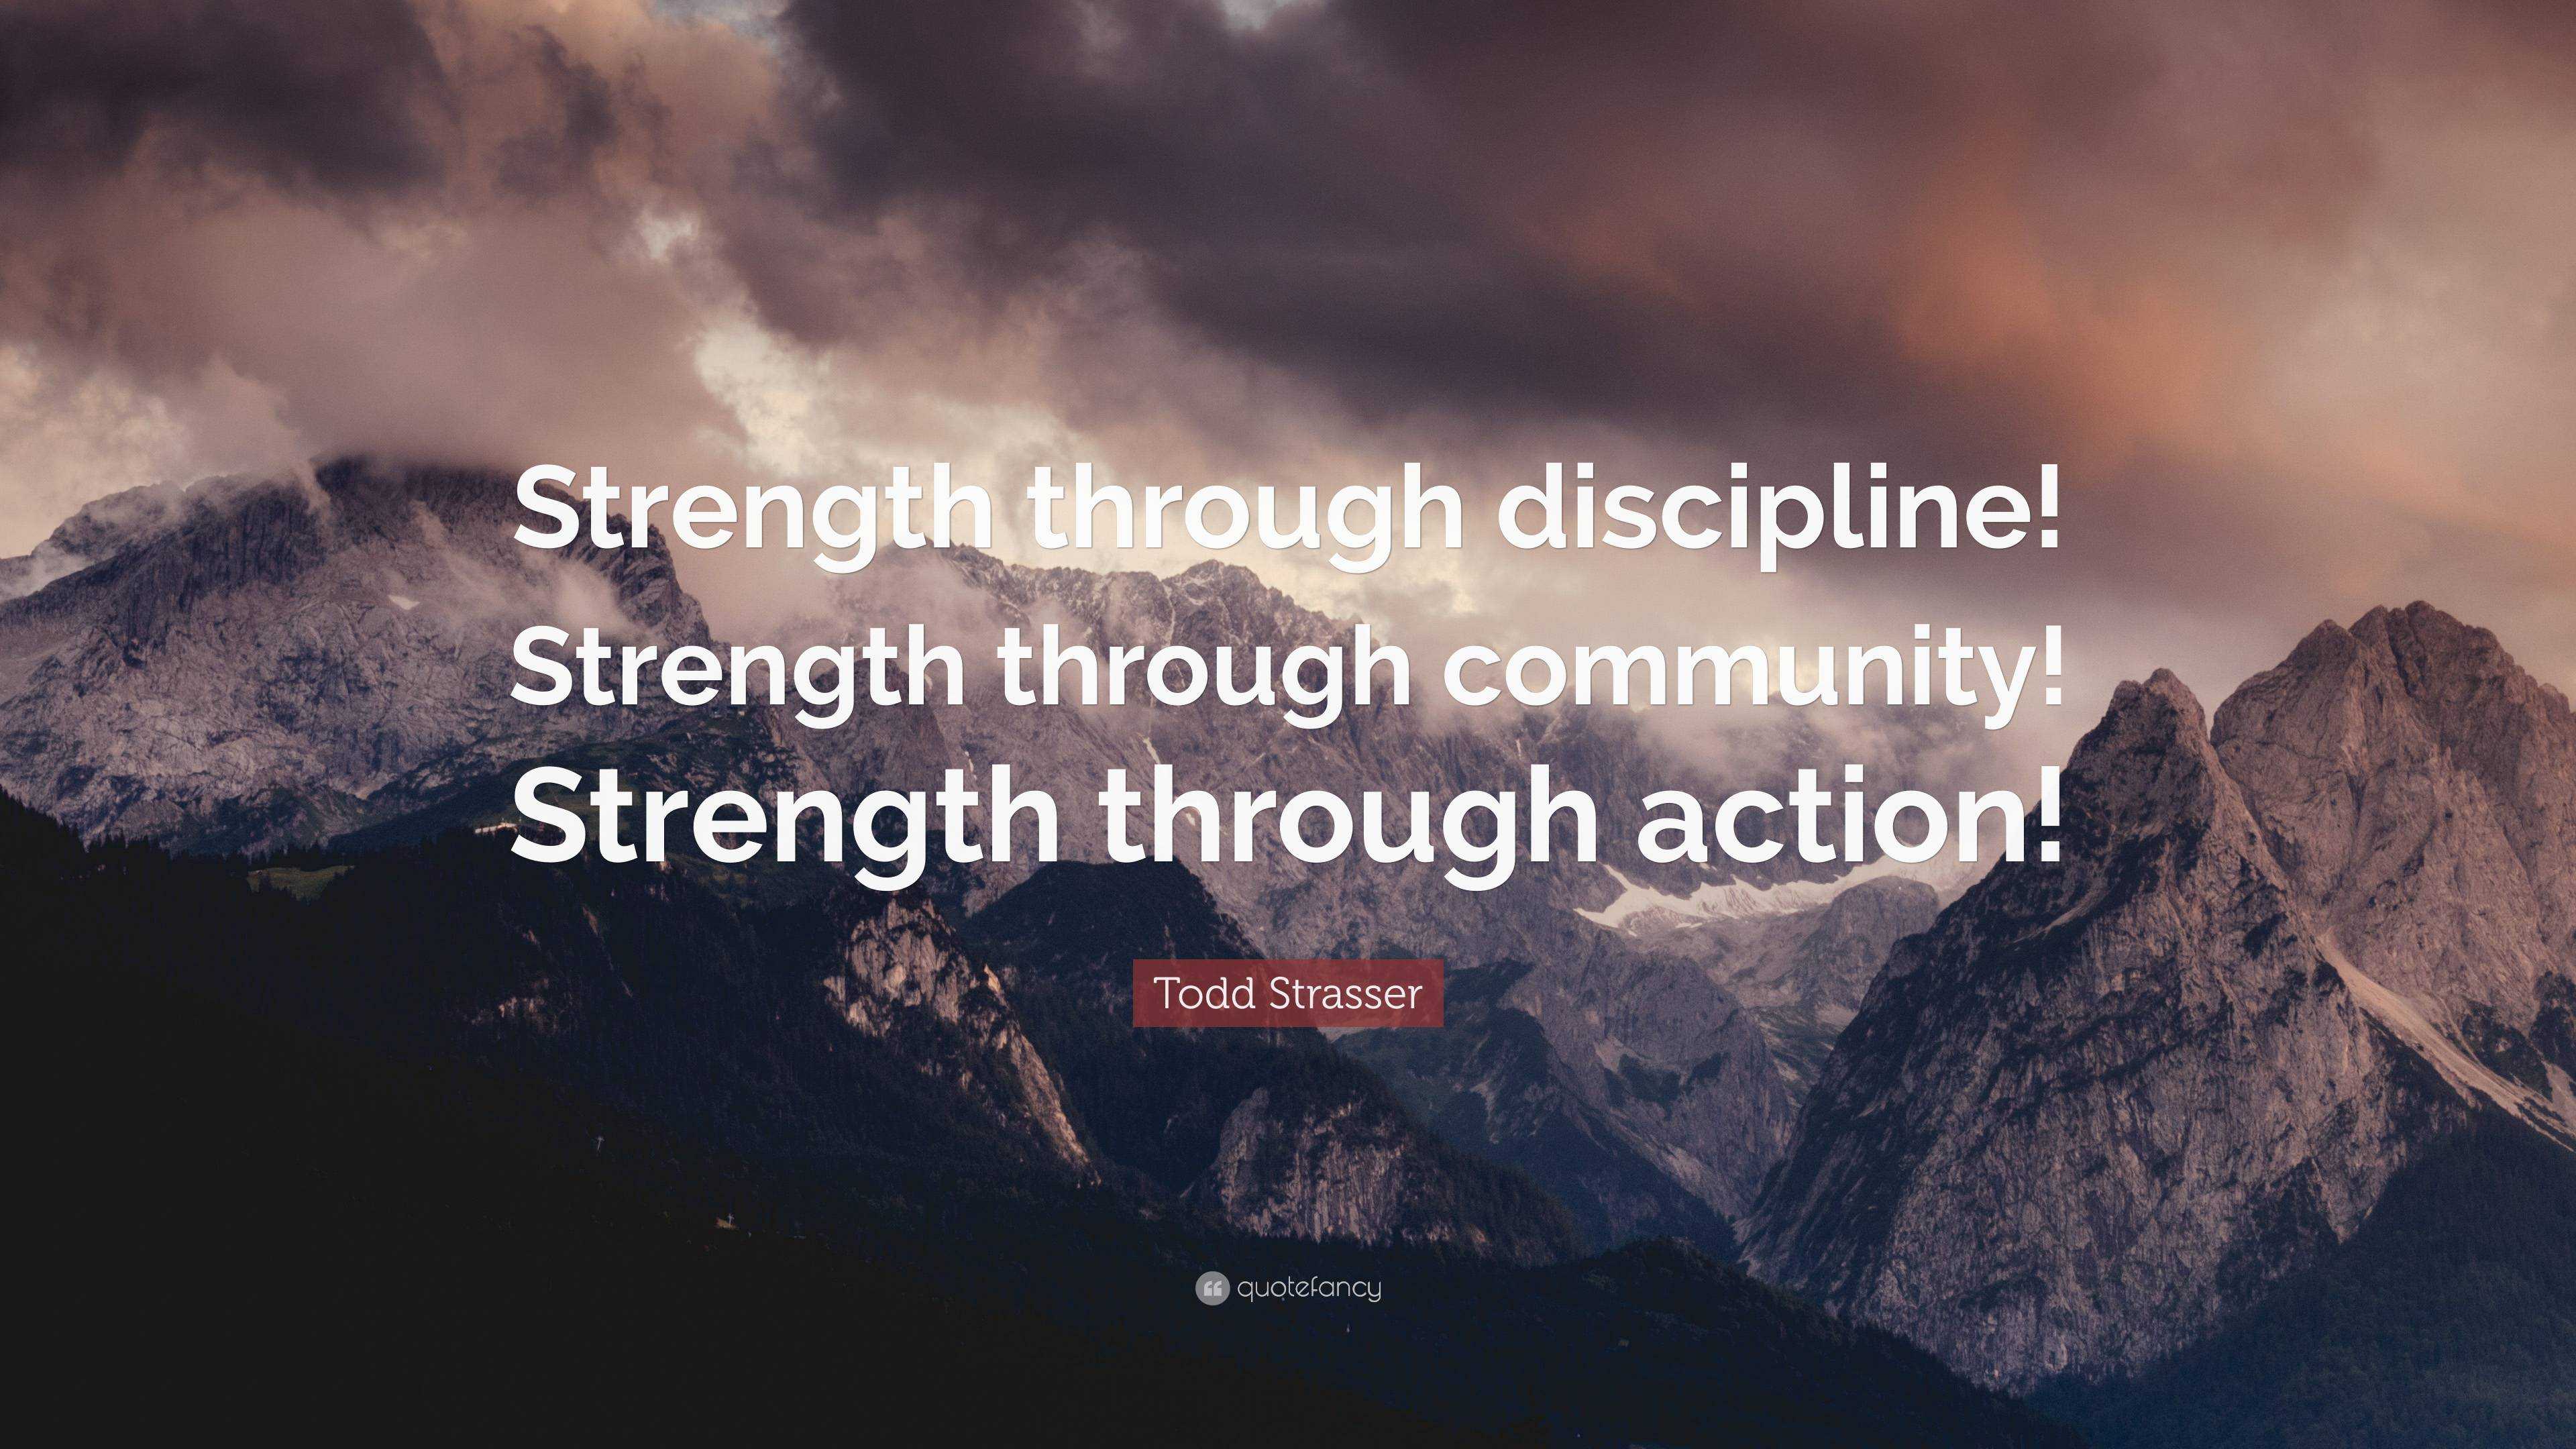 Todd Strasser Quote “Strength through discipline